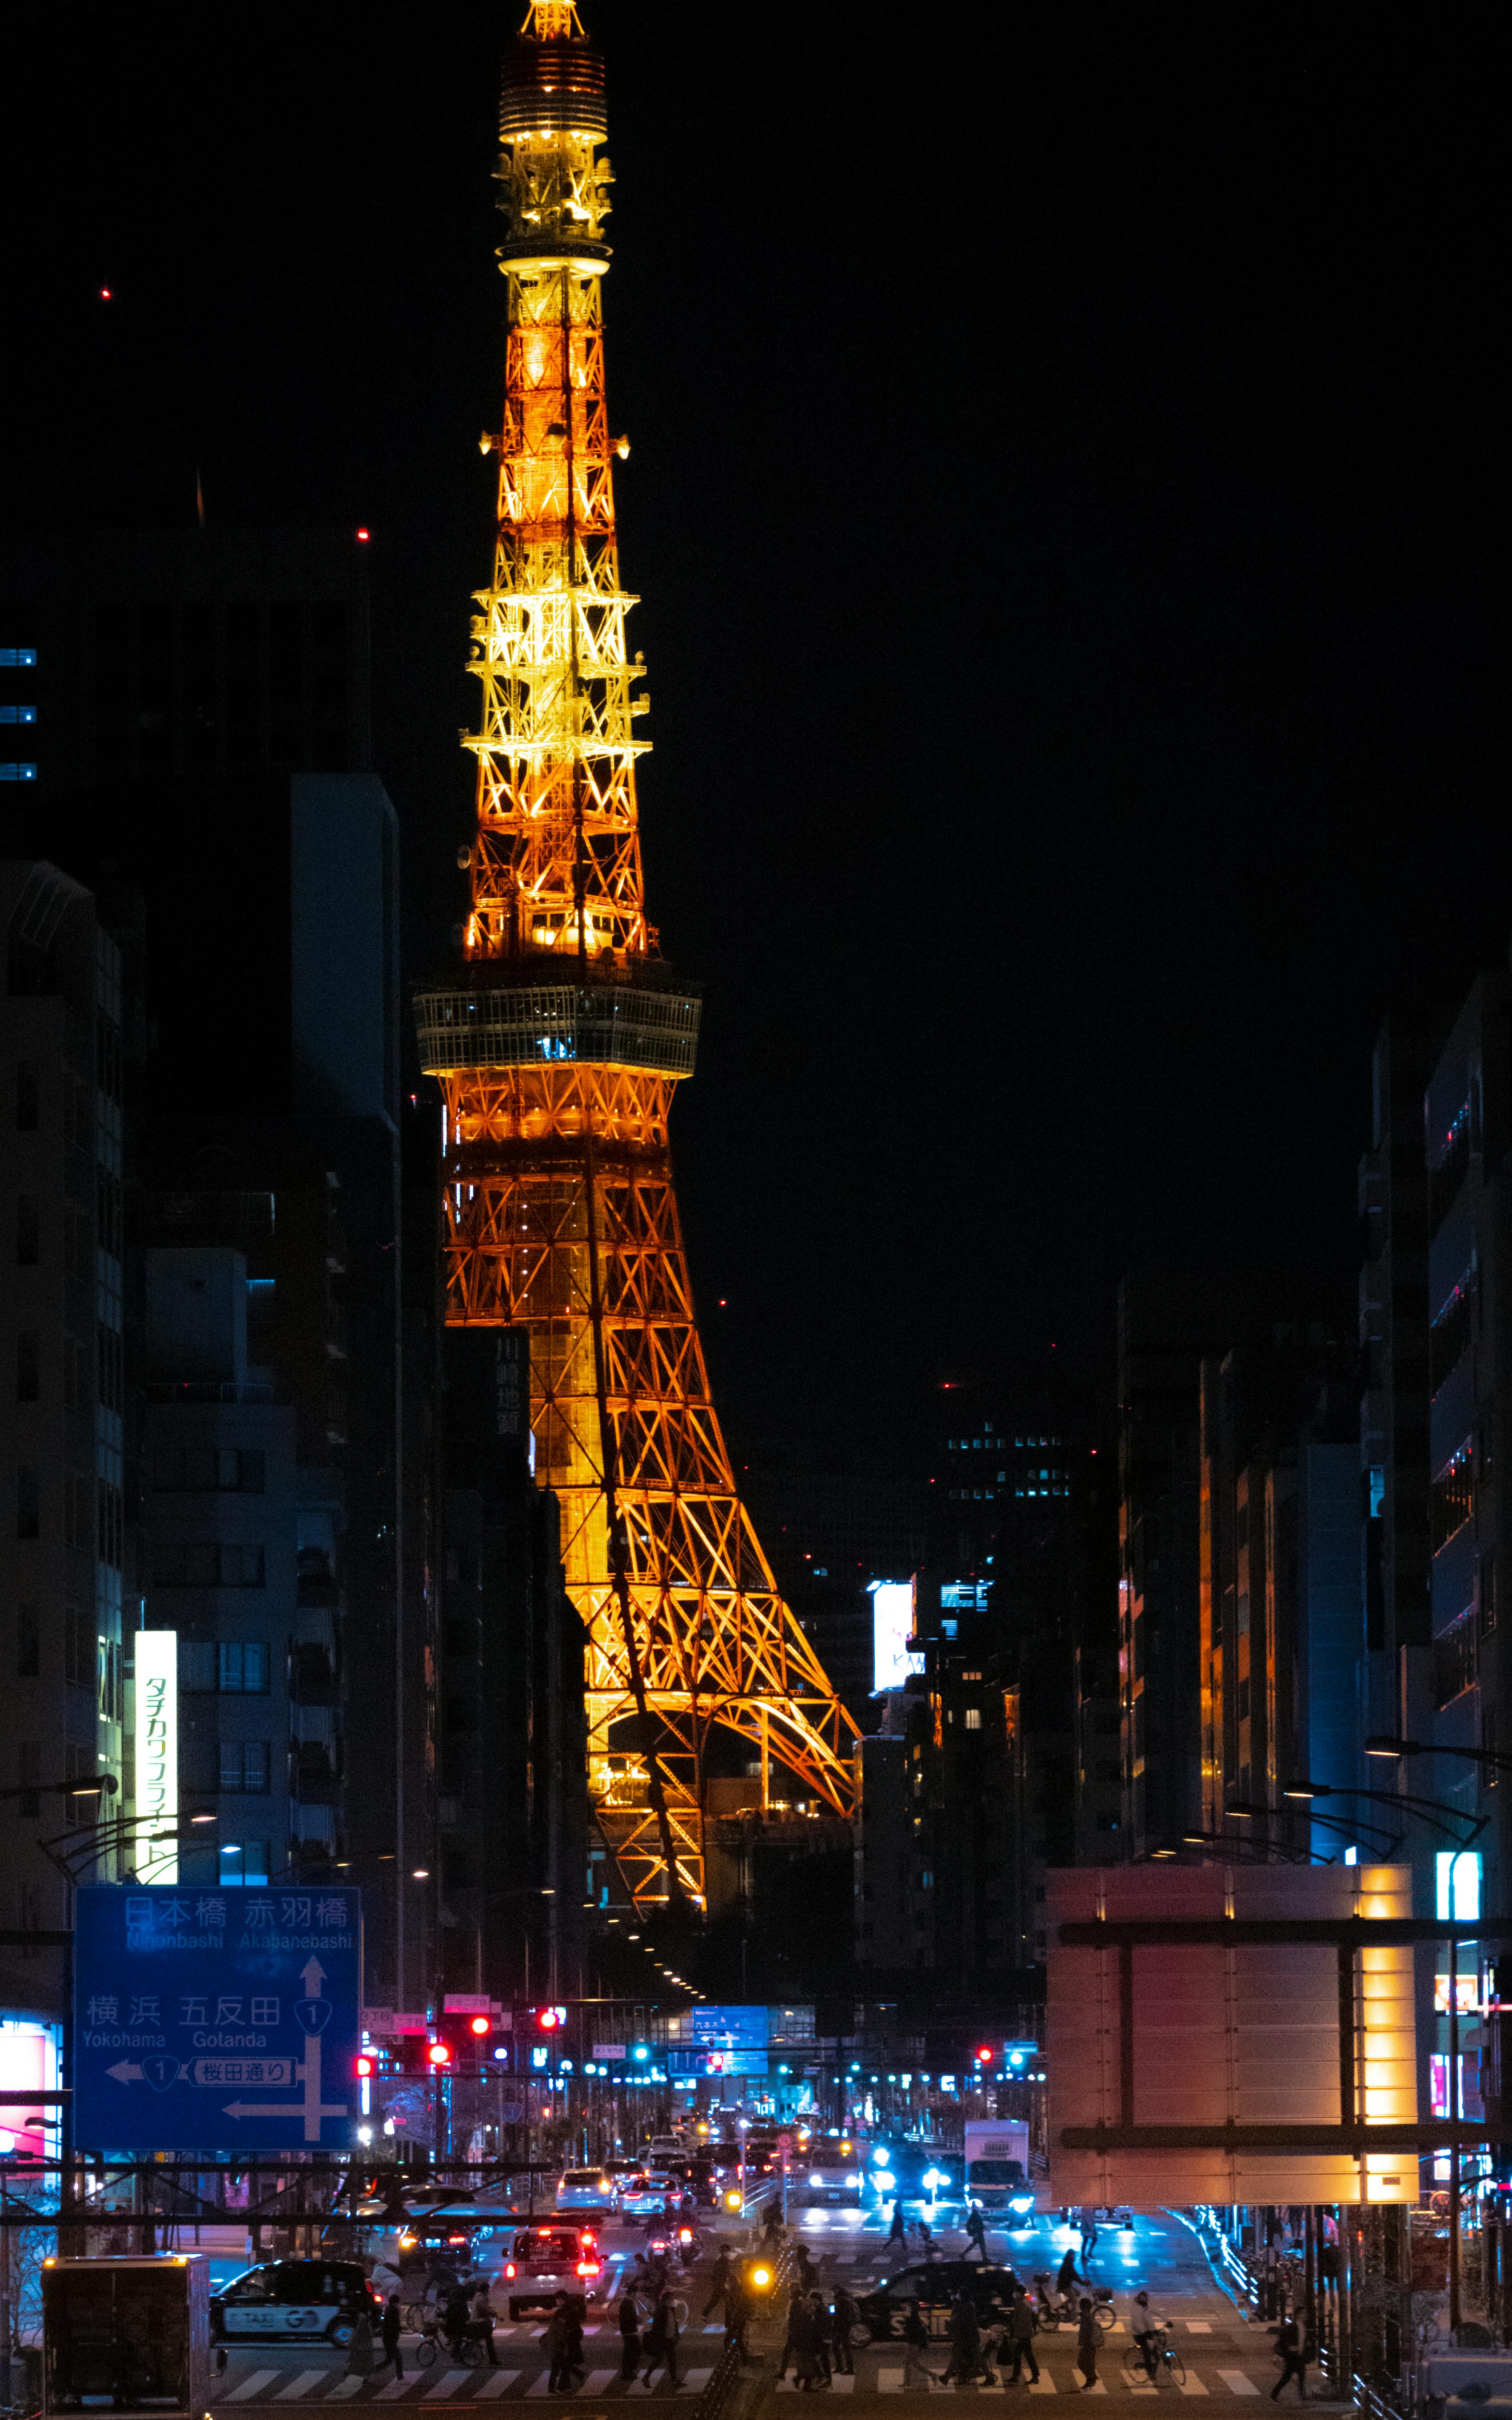 eiffel tower at night tumblr